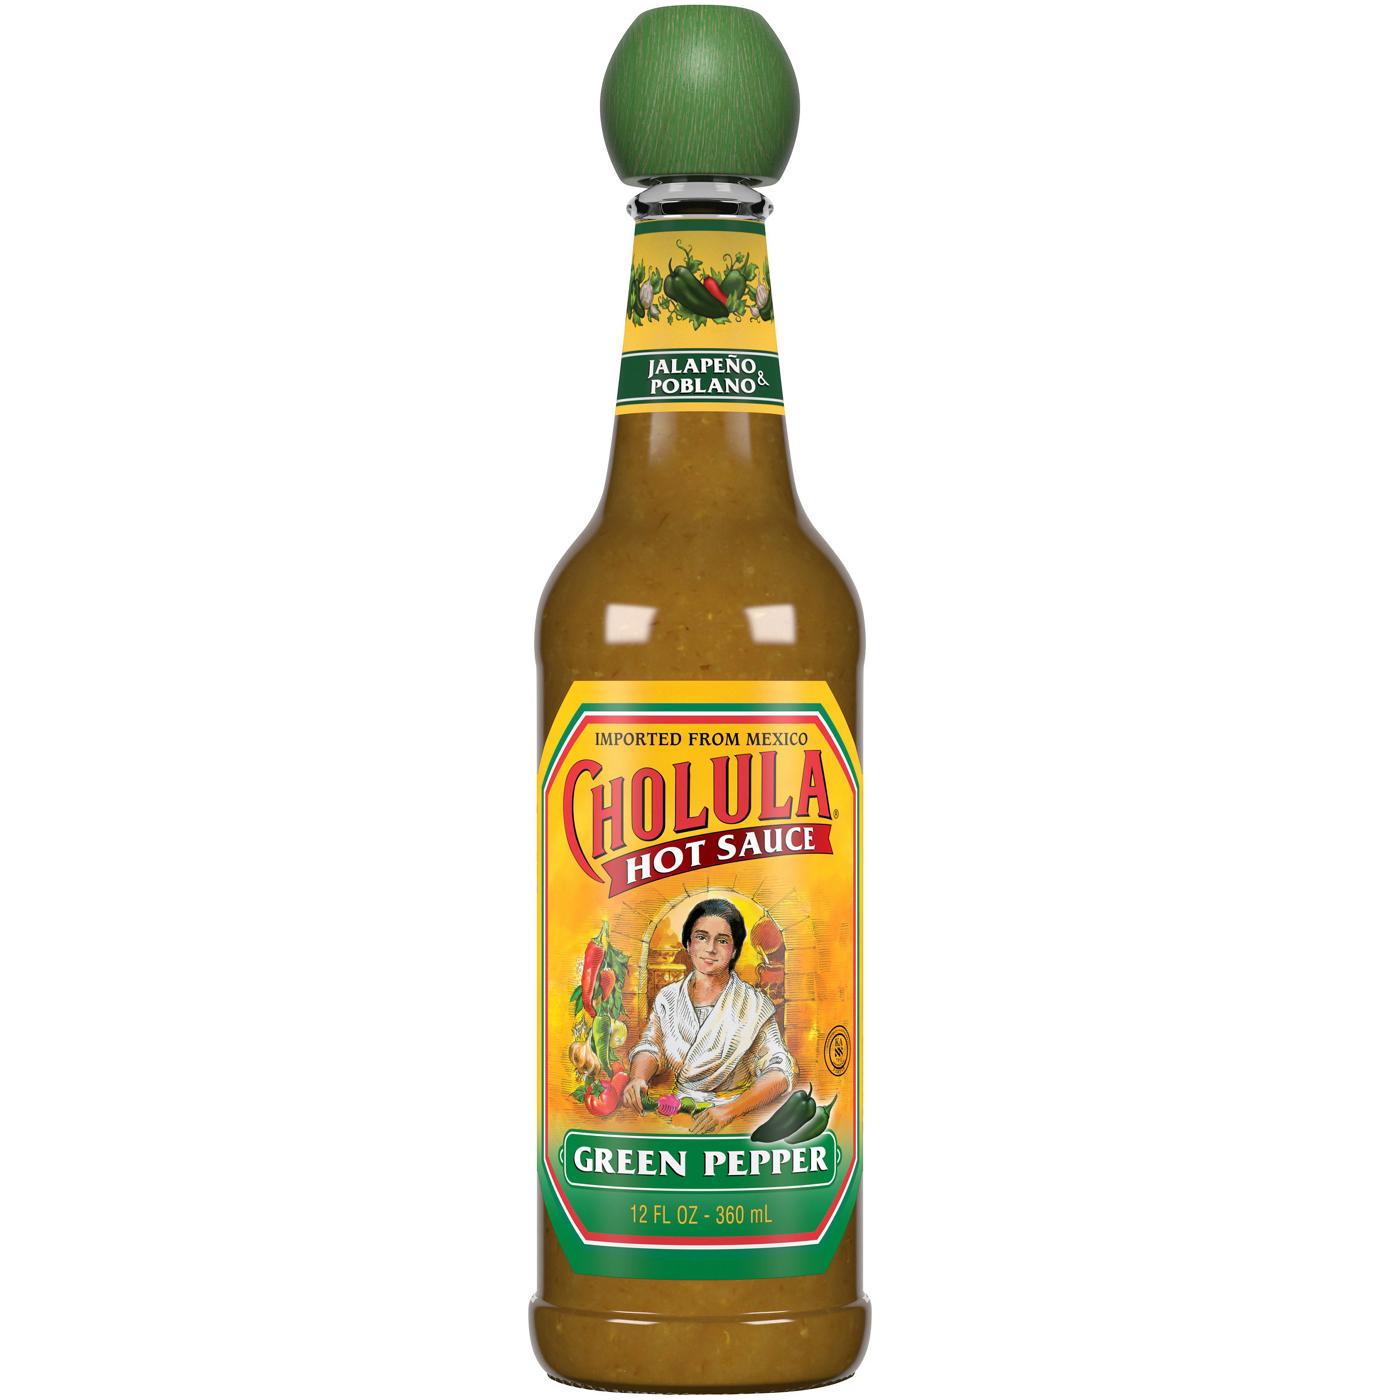 Cholula Green Pepper Hot Sauce; image 1 of 3